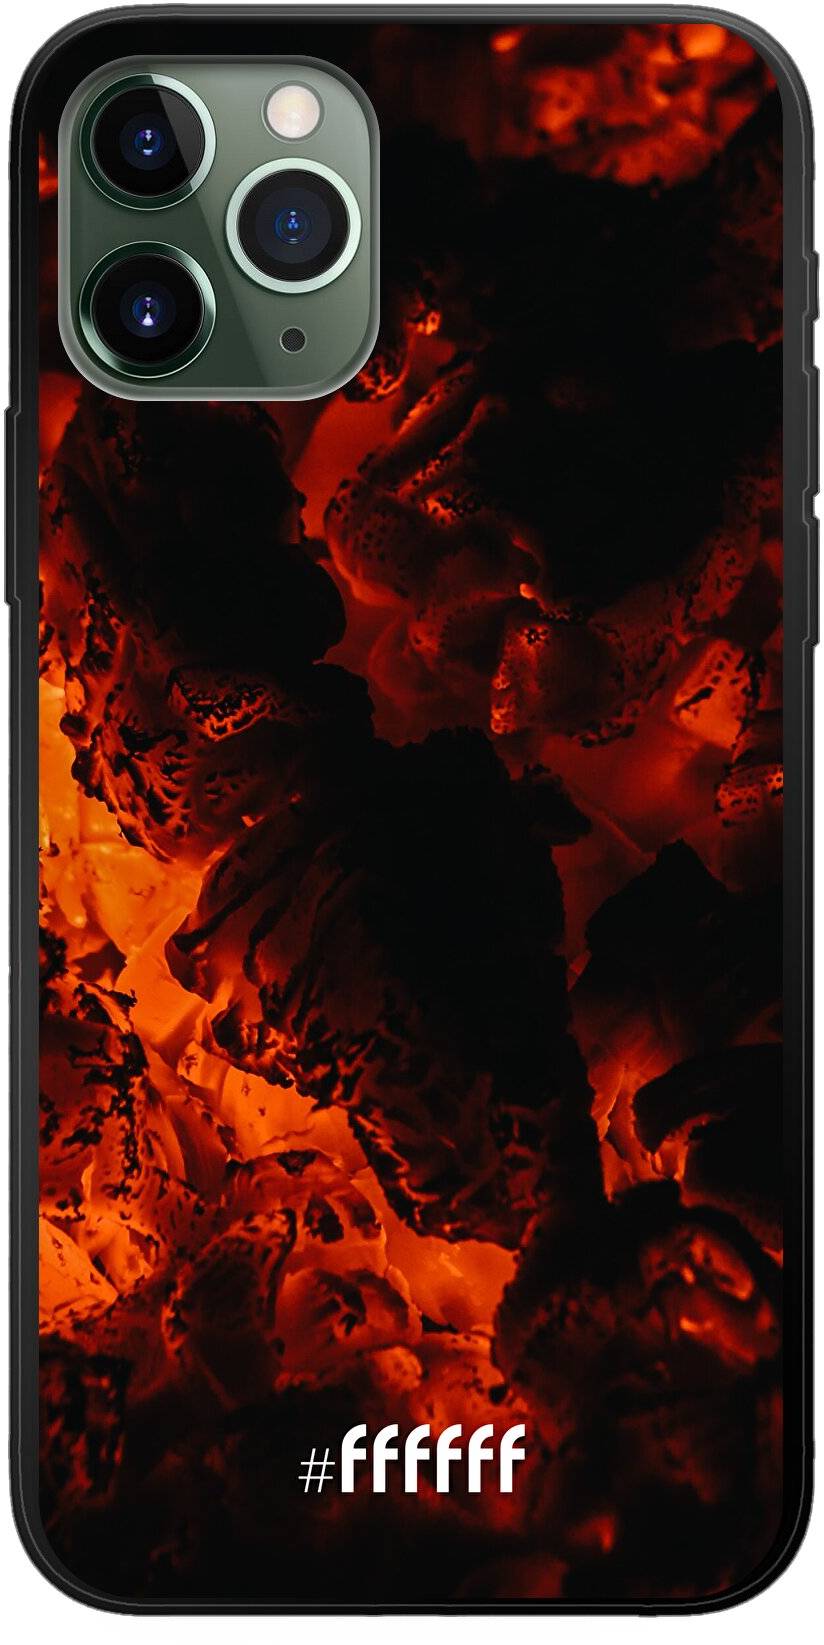 Hot Hot Hot iPhone 11 Pro